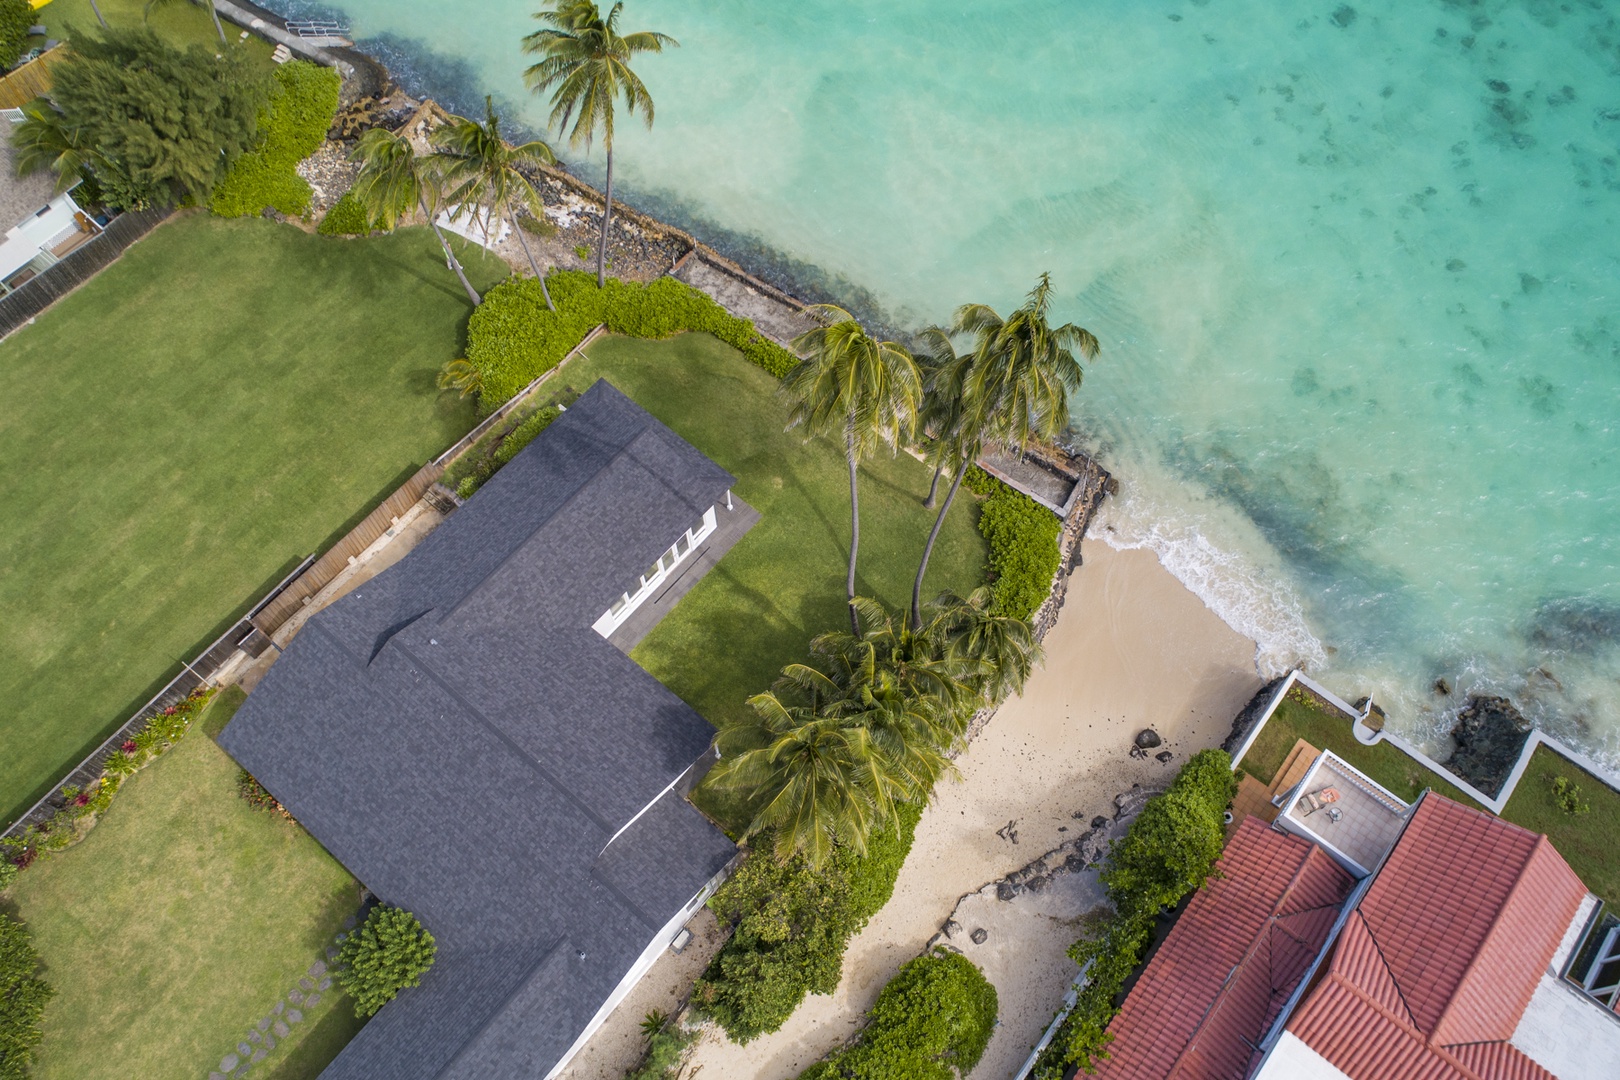 Kailua Vacation Rentals, Lanikai Oceanside 4 Bedroom - Lanikai Oceanside sits adjacent to a public beach access